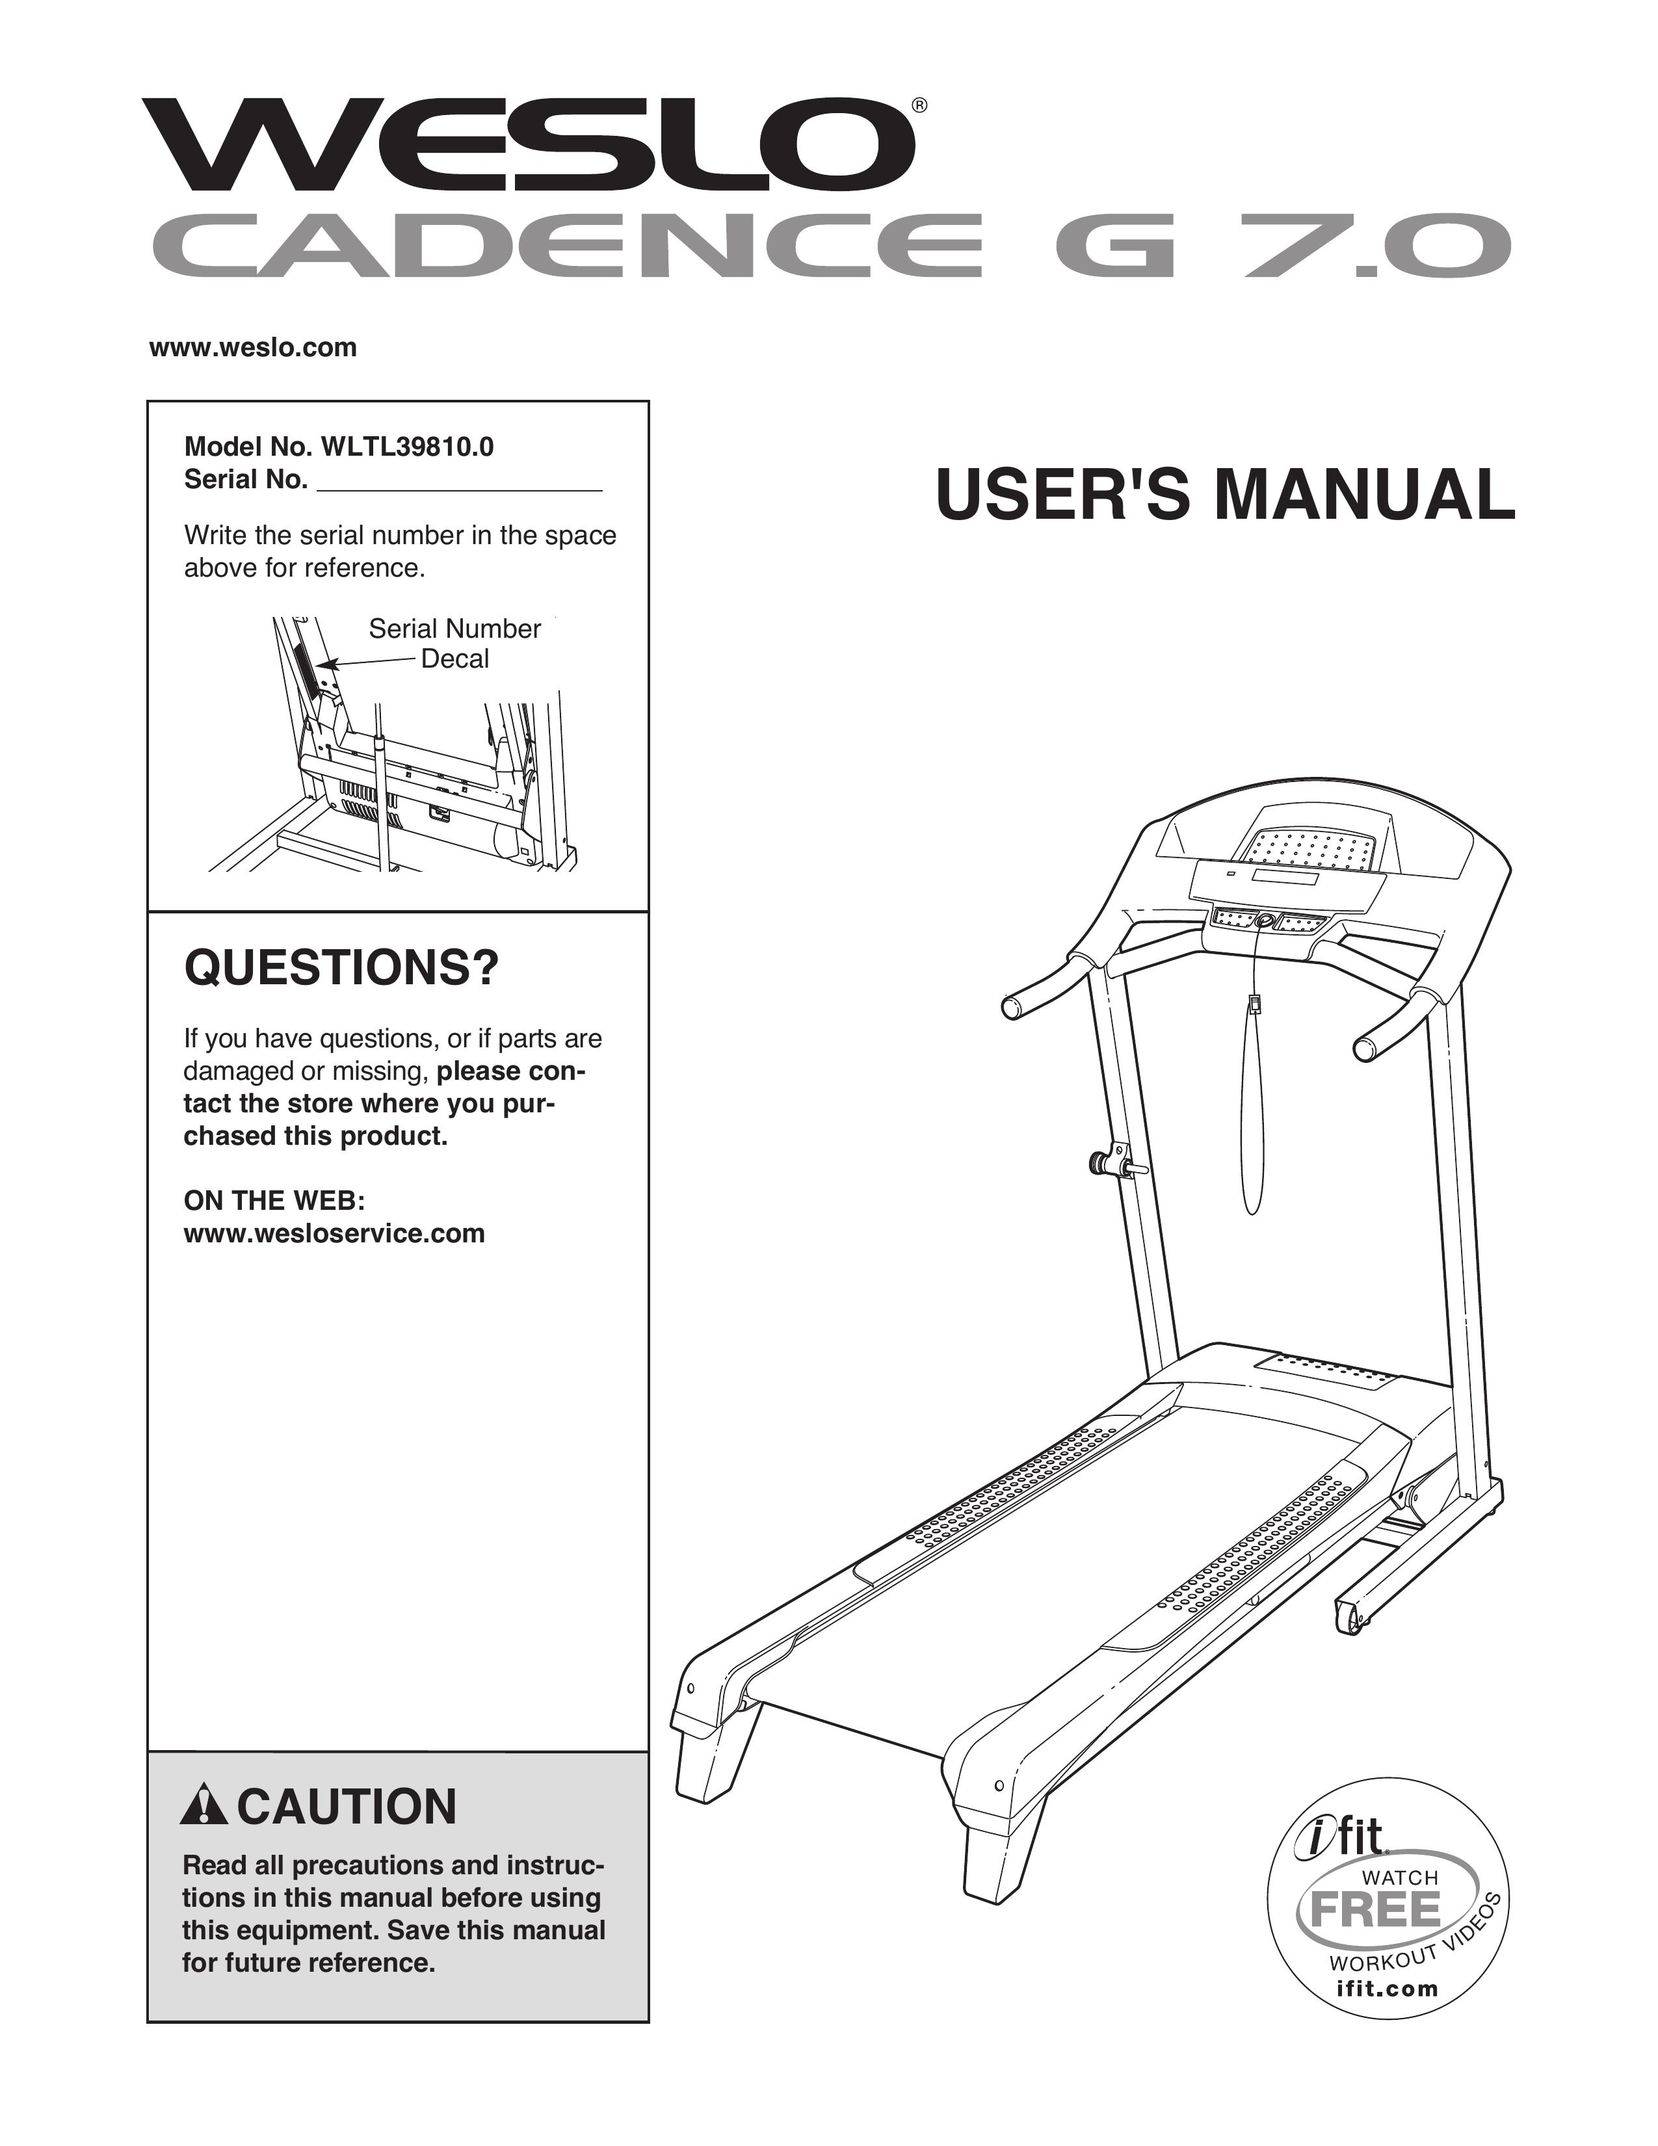 Cadence g 7.0 Treadmill User Manual (Page 1)